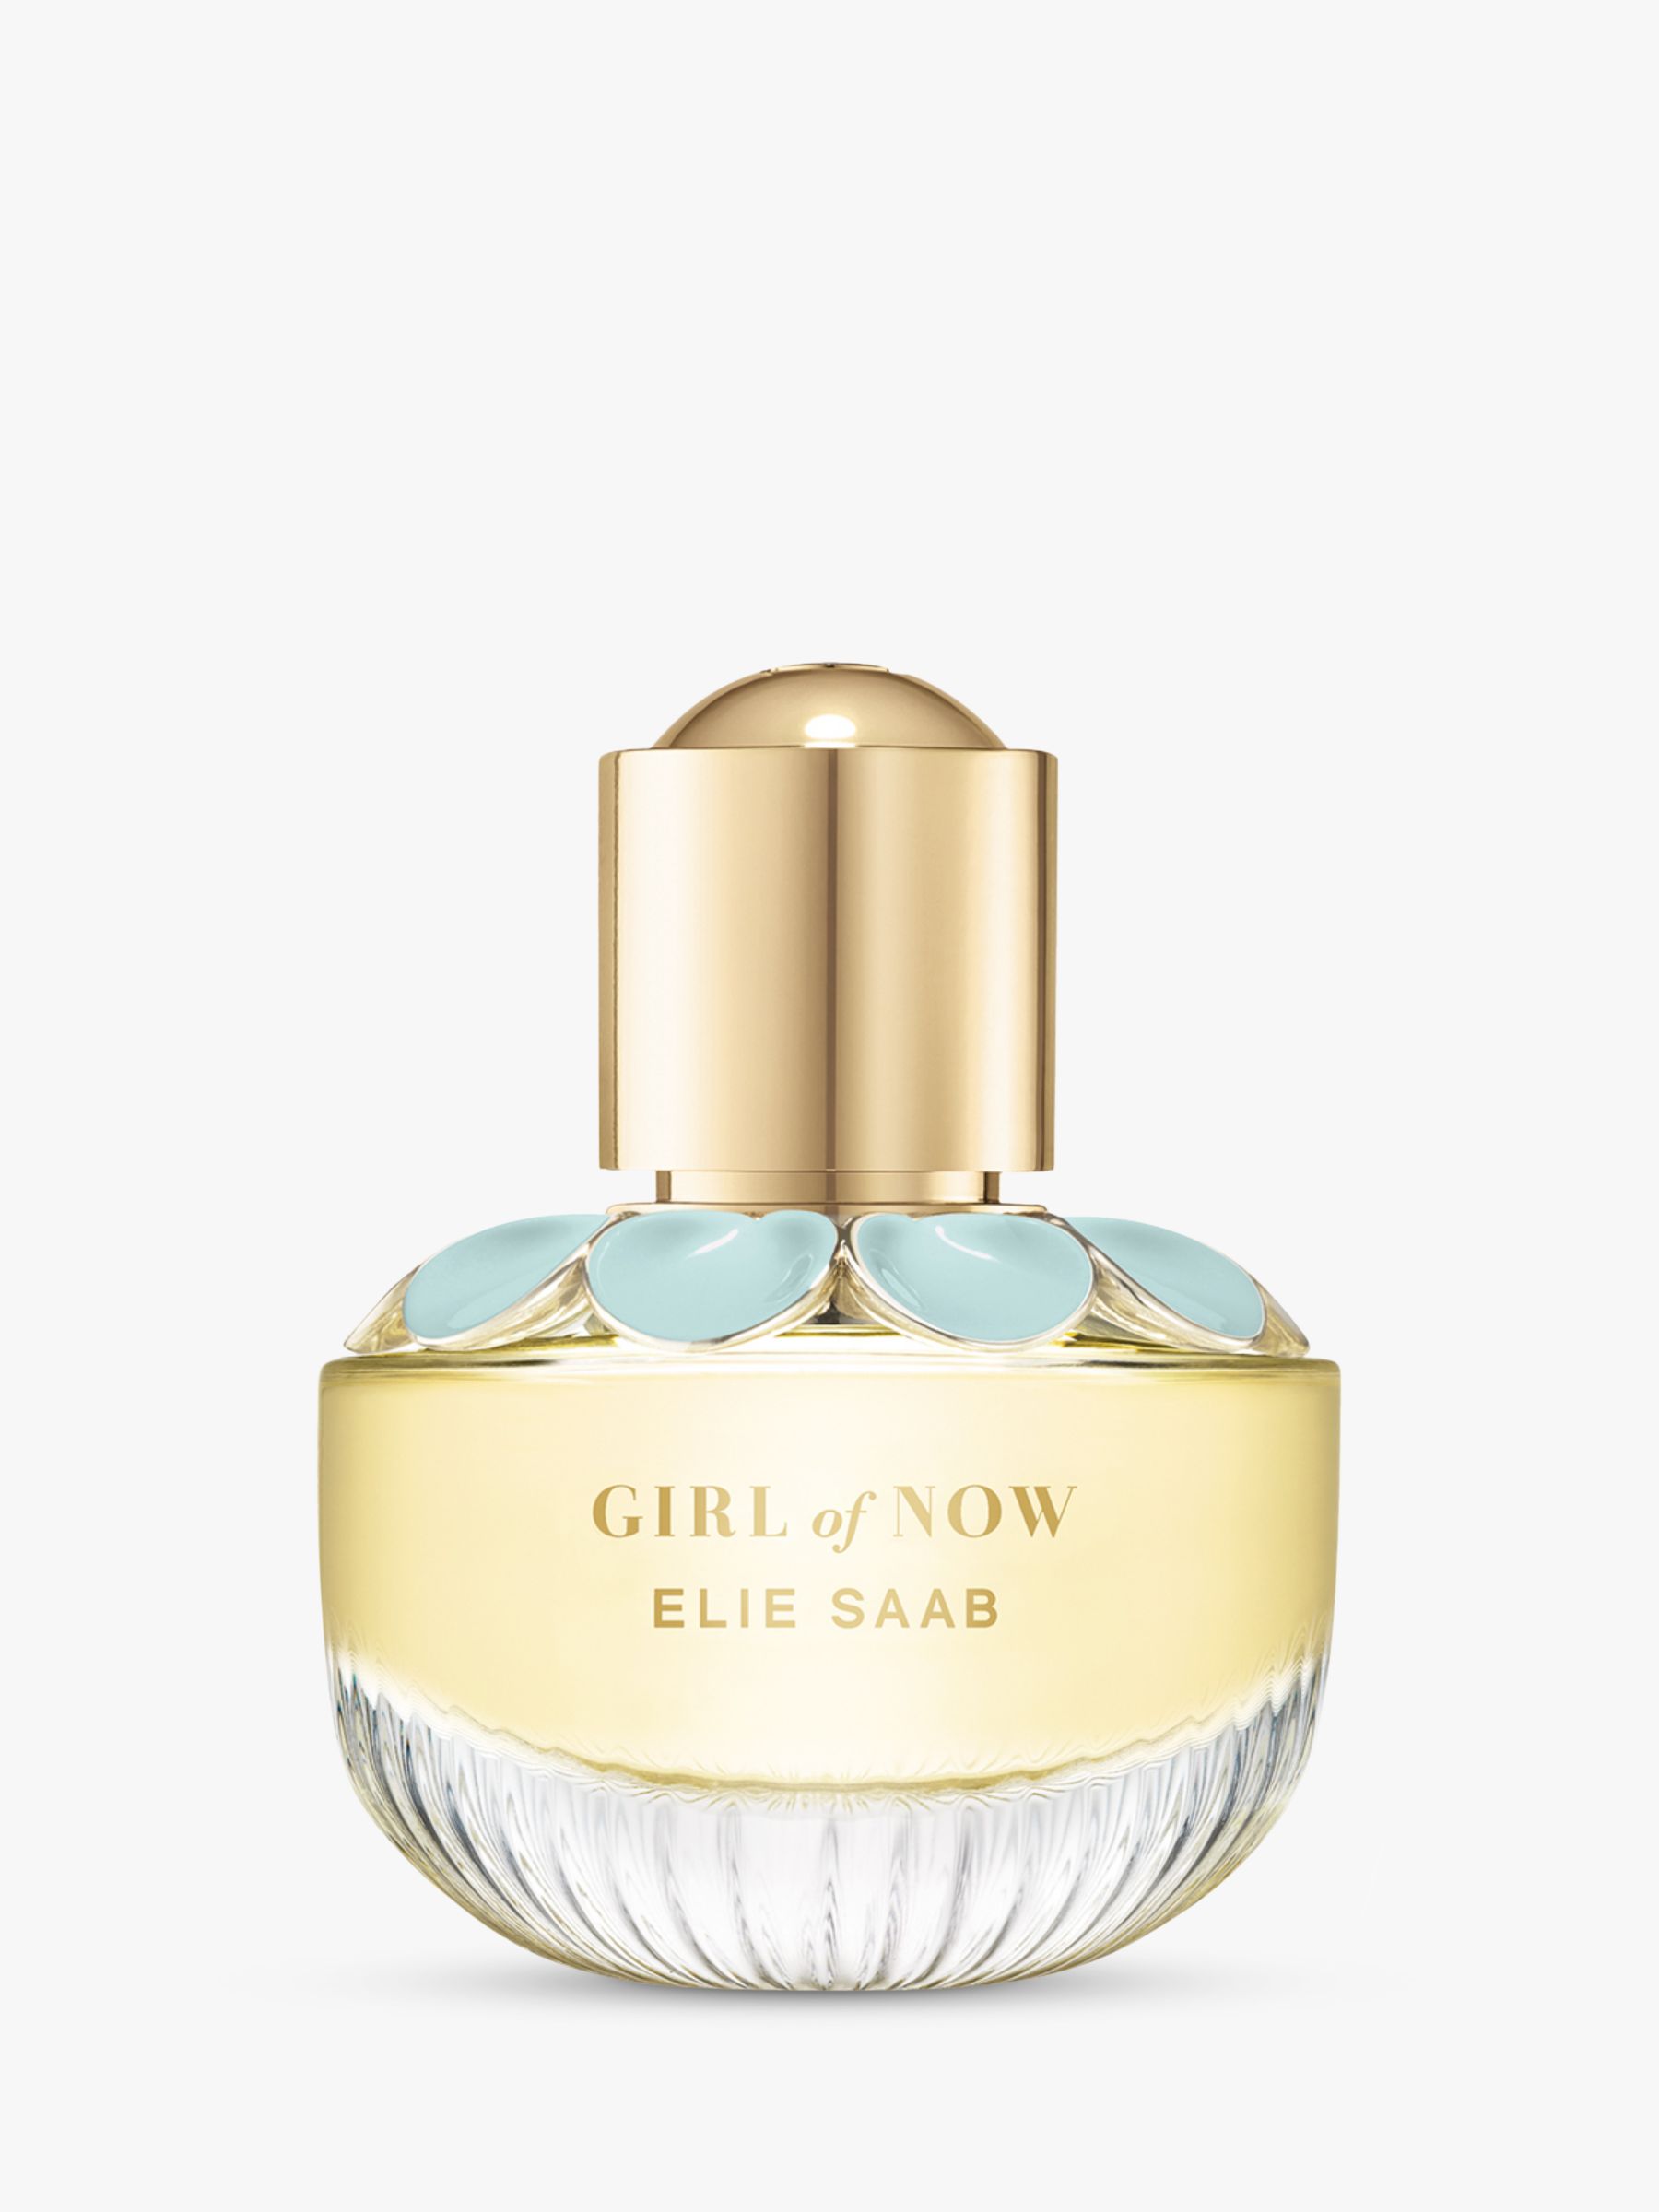 Elie Saab Girl of Now Eau de Parfum, 30ml at John Lewis & Partners